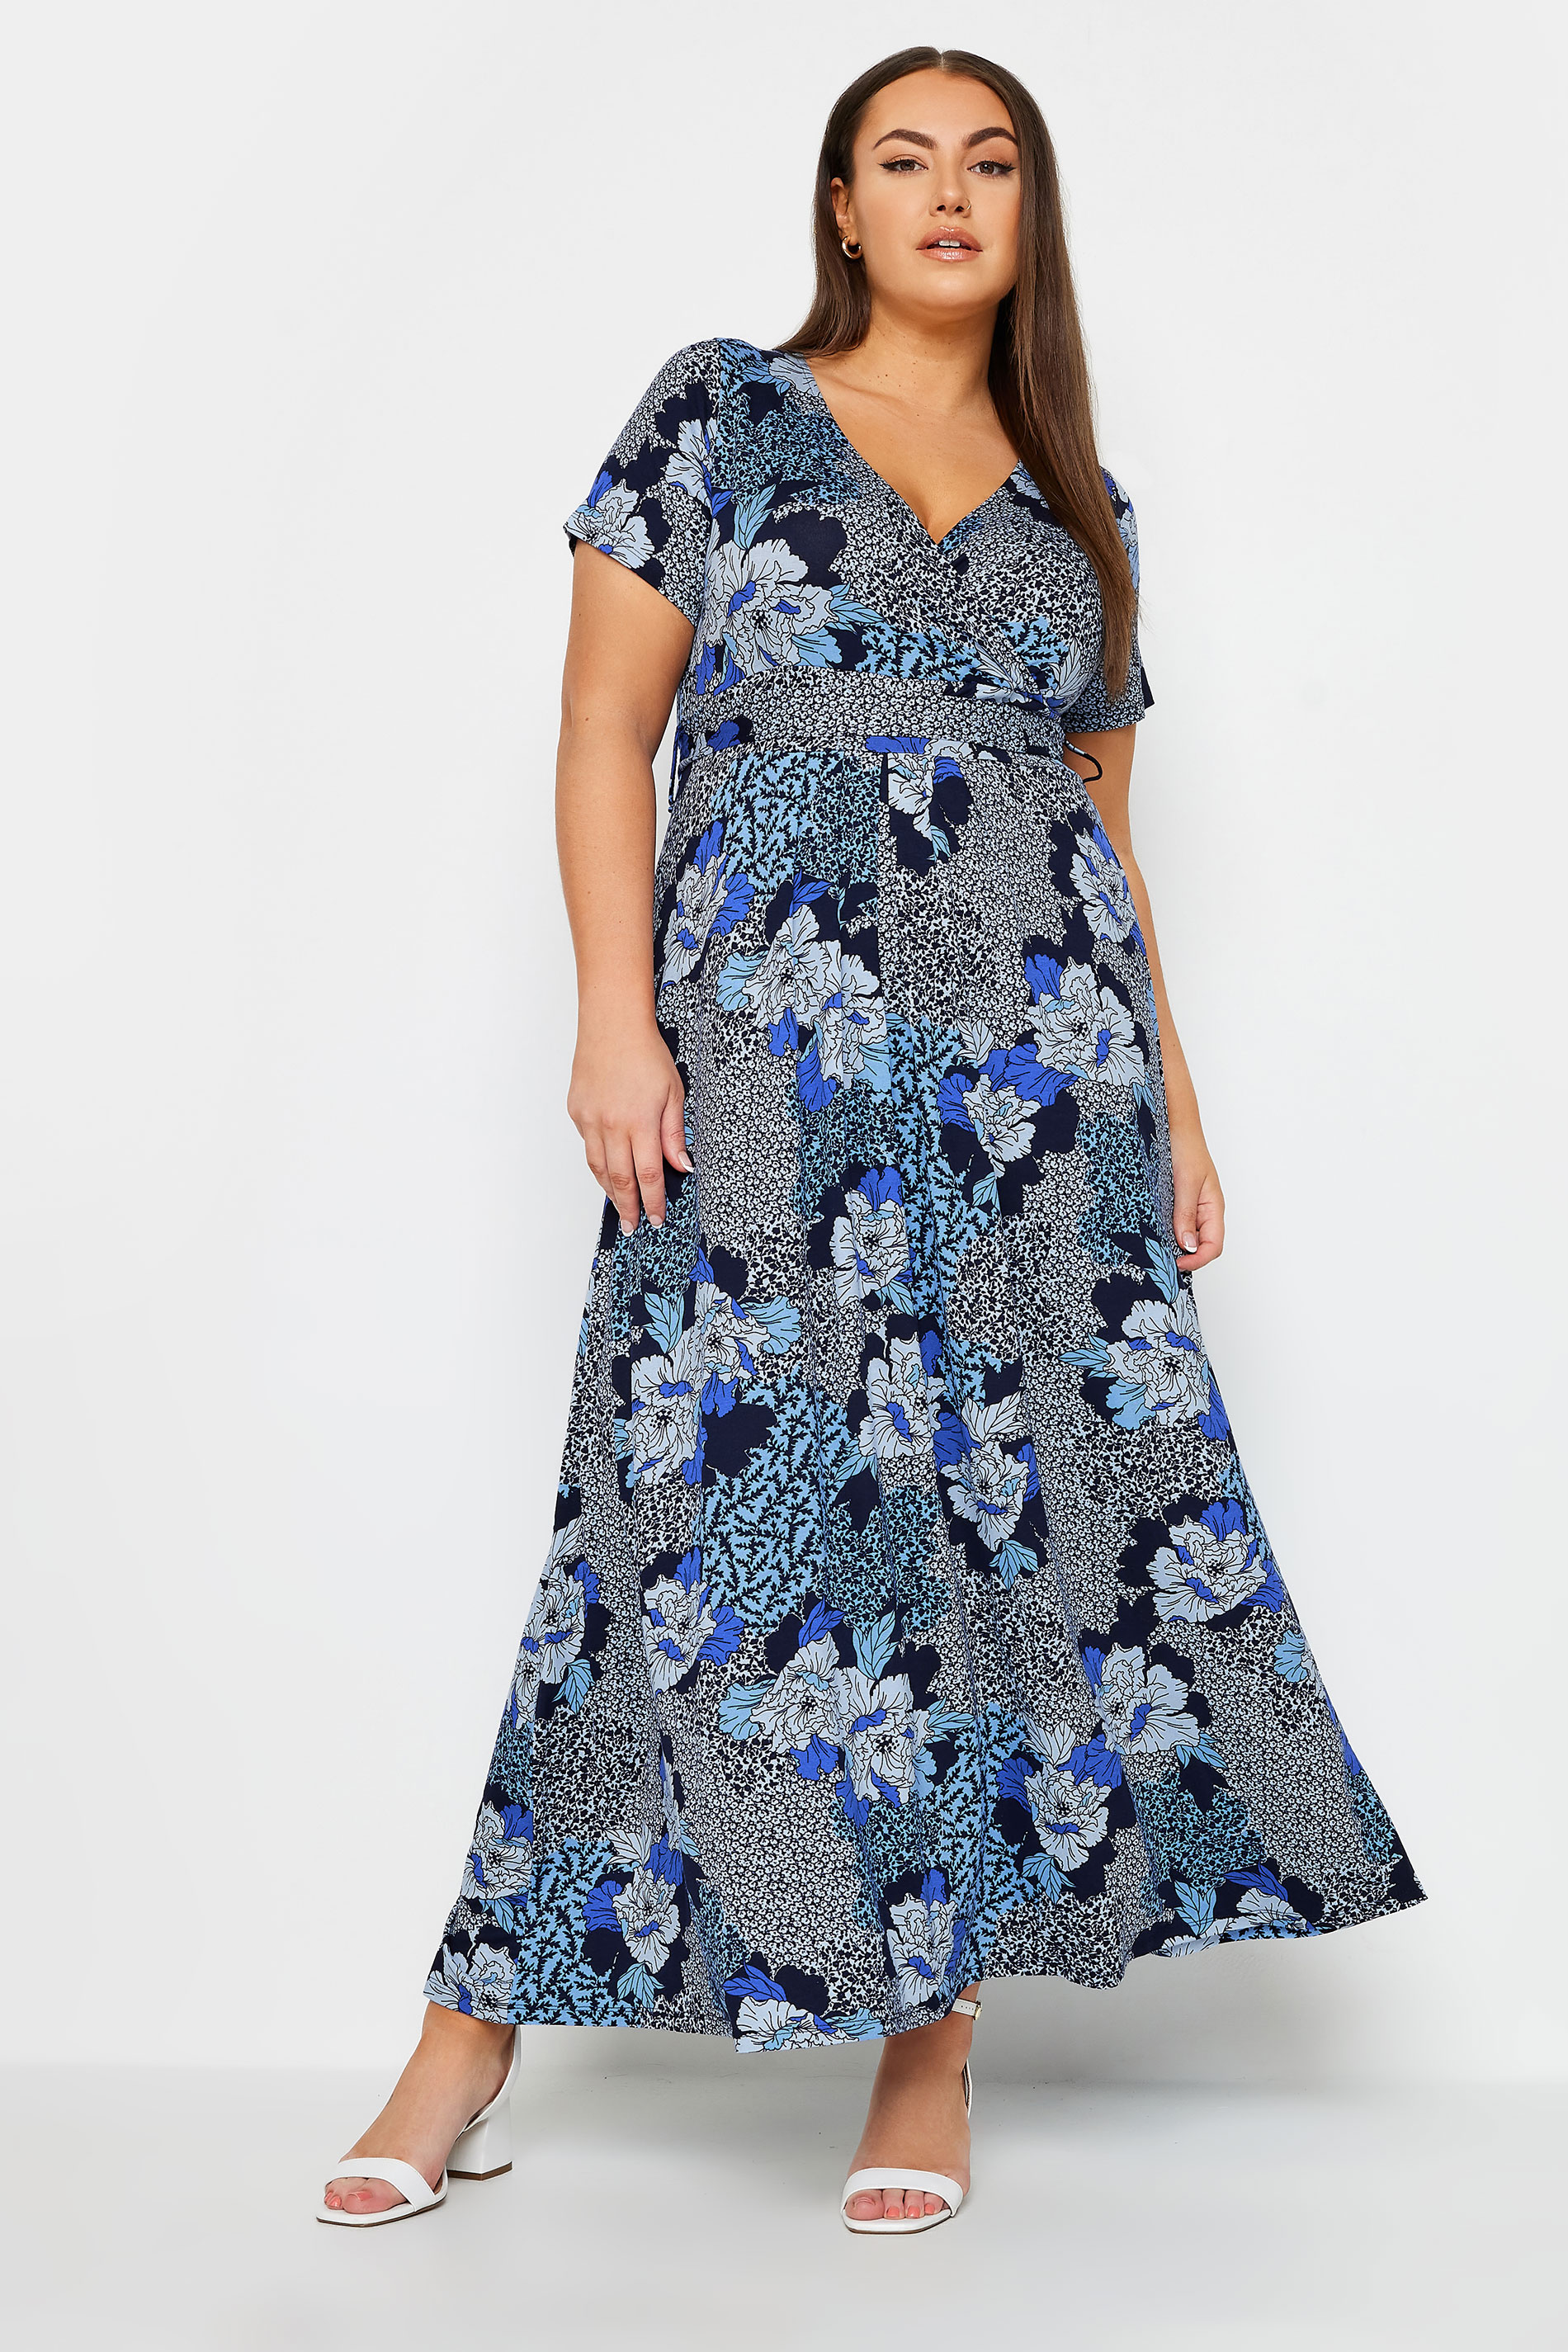 YOURS Plus Size Blue Floral Print Wrap Maxi Dress | Yours Clothing